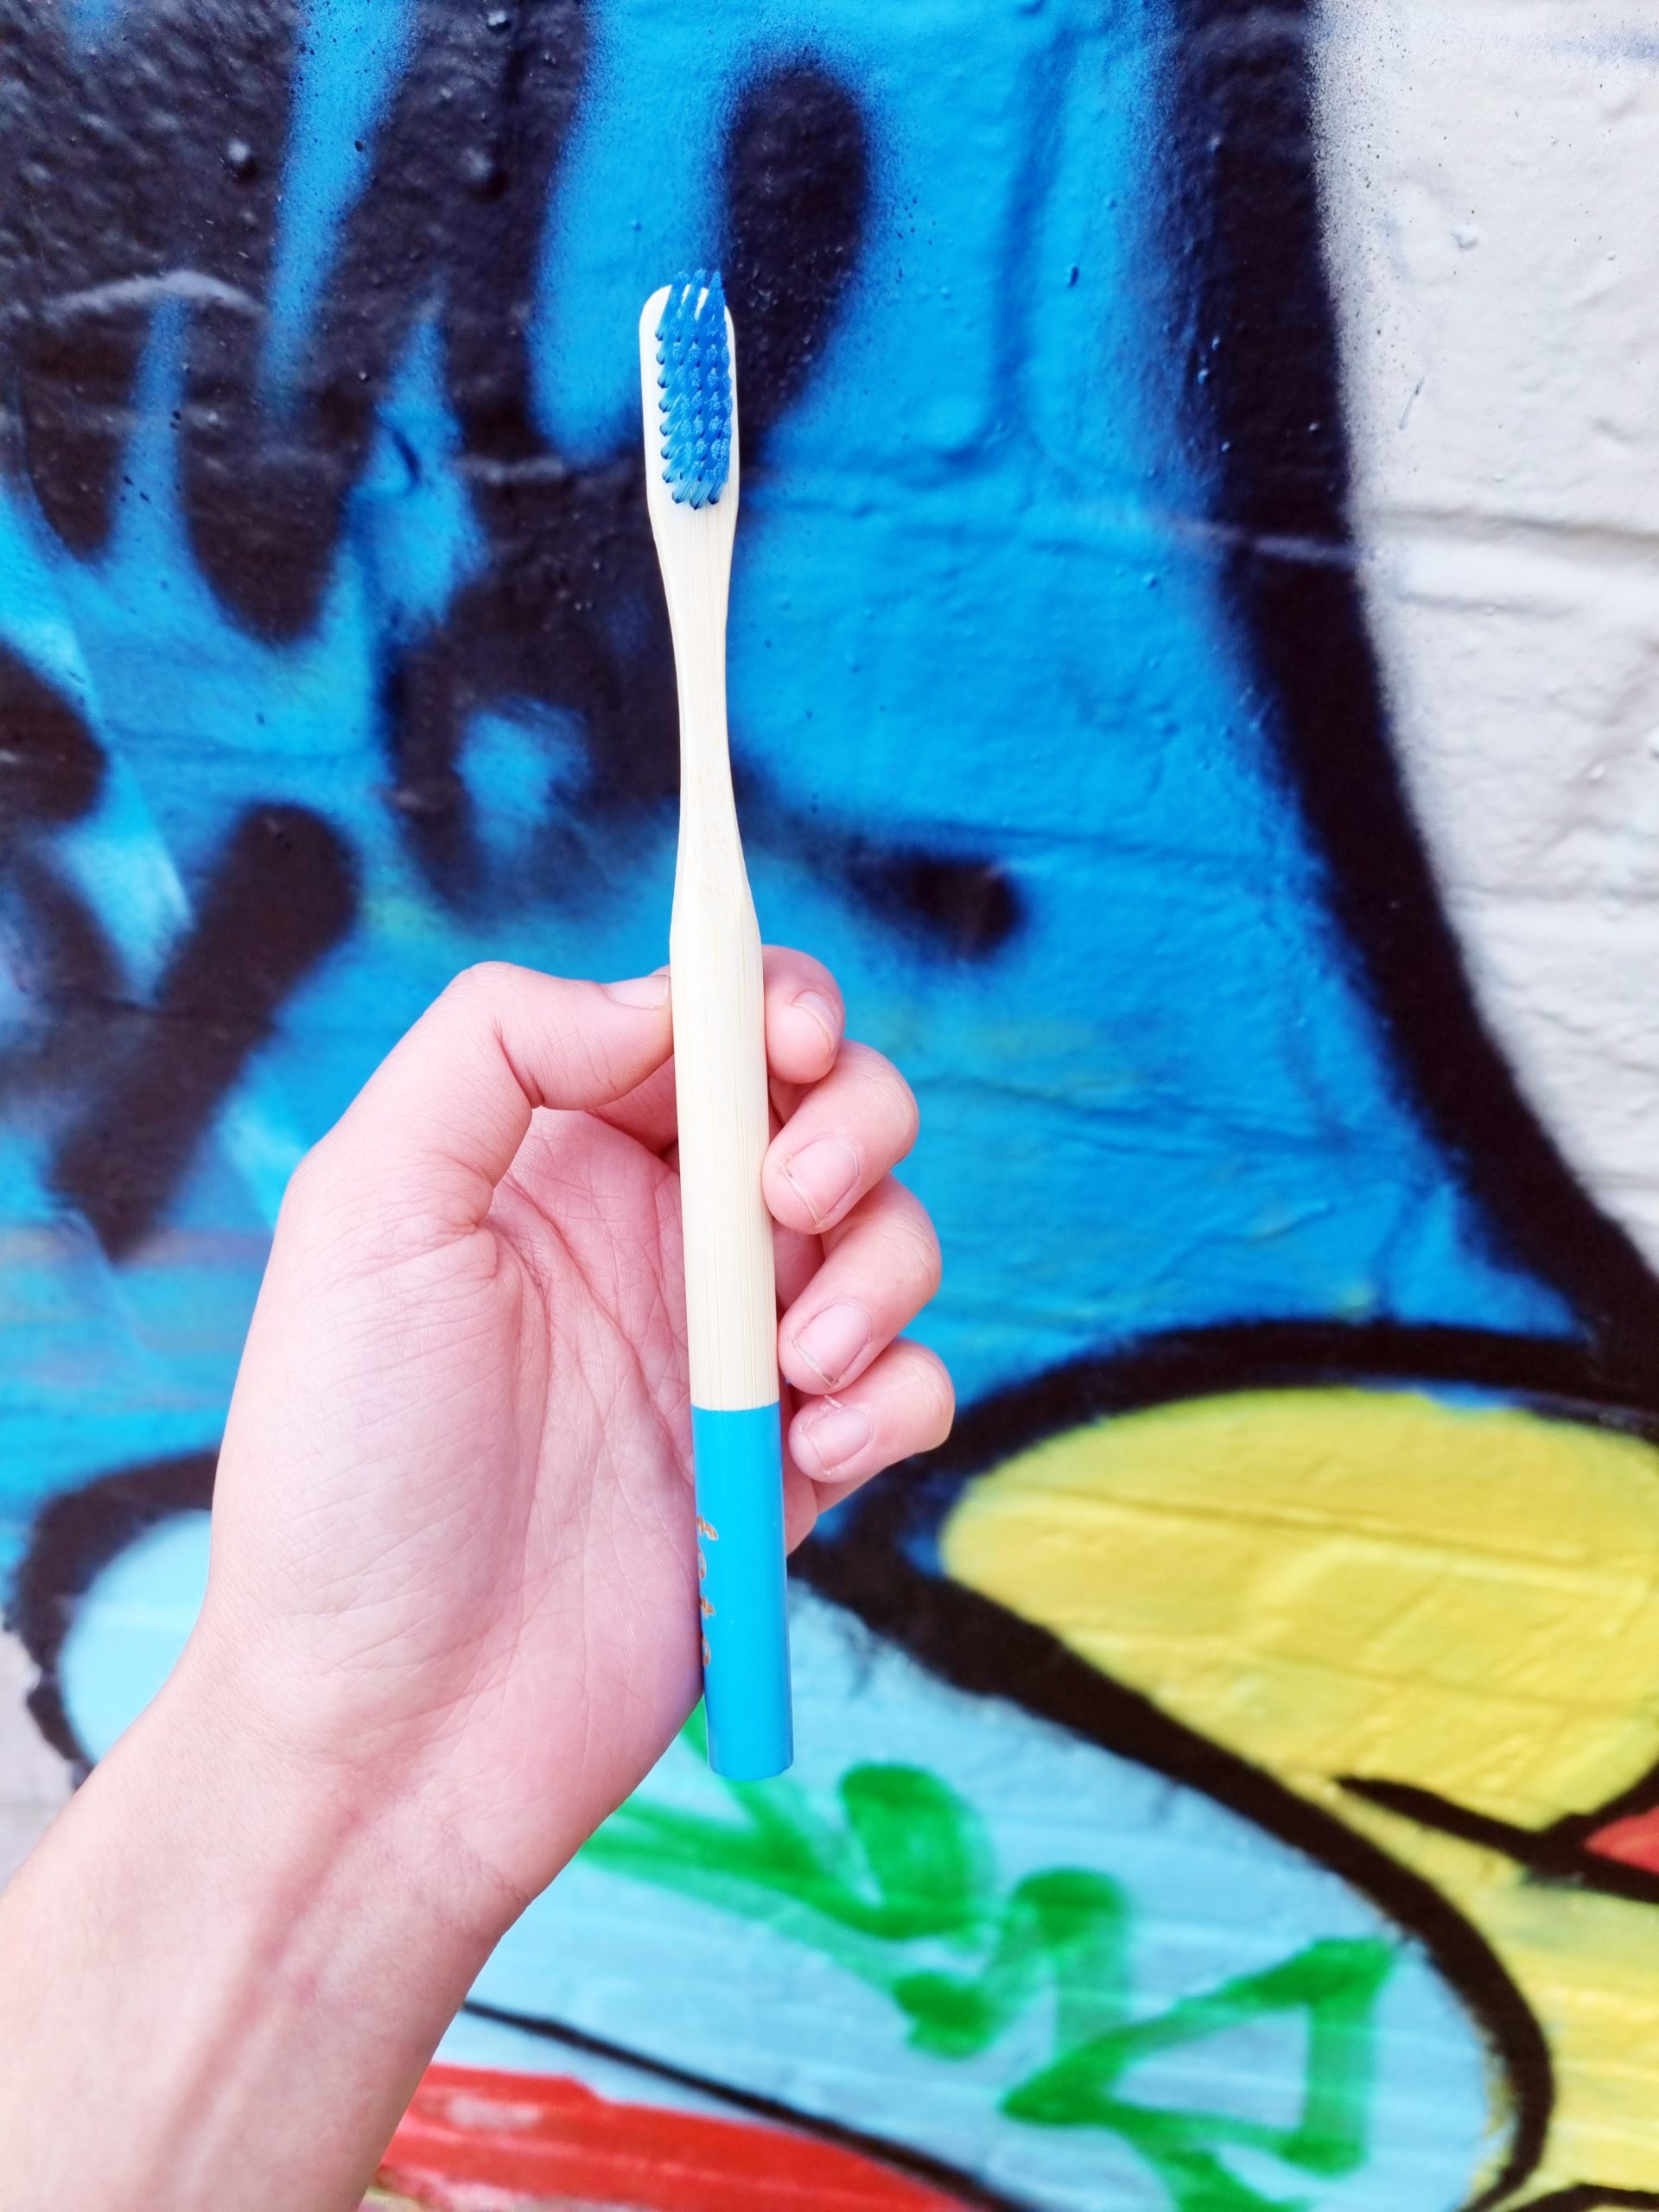 <img src="blue.jpg" alt="eco friendly gift ideas bamboo toothbrush"/> 